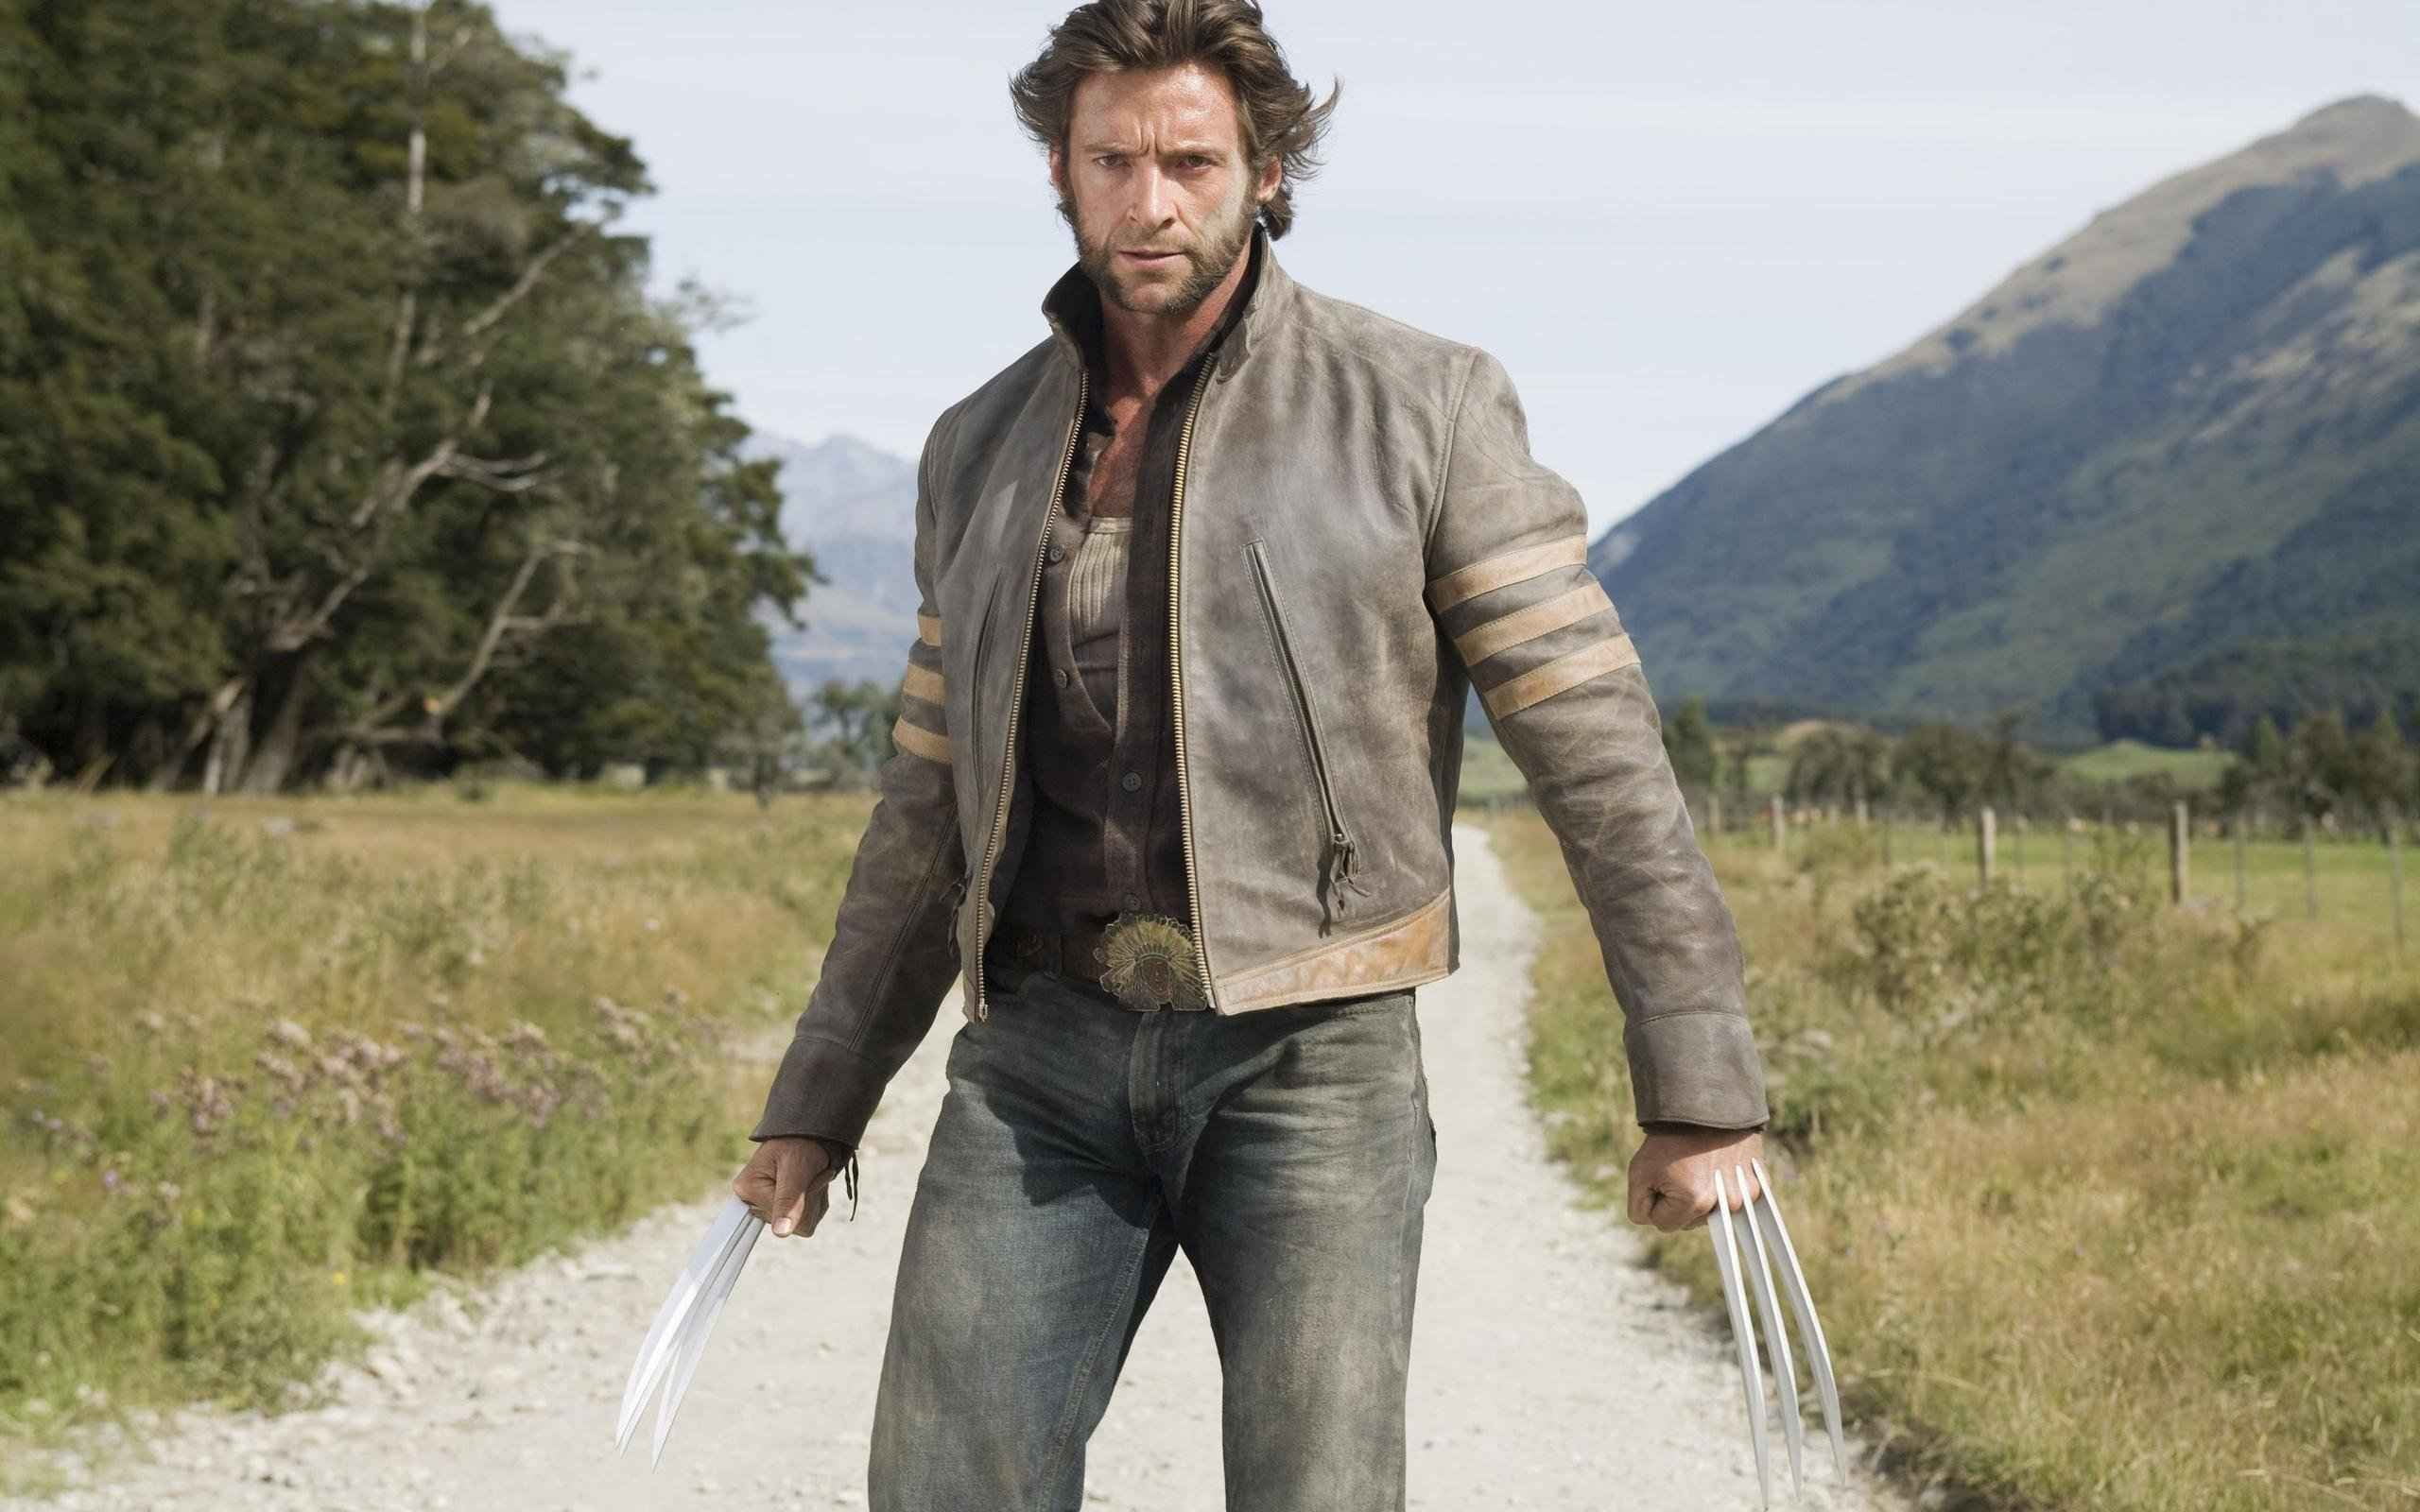 Hugh Jackman as Wolverine, X-Men Origins: Wolverine, one person